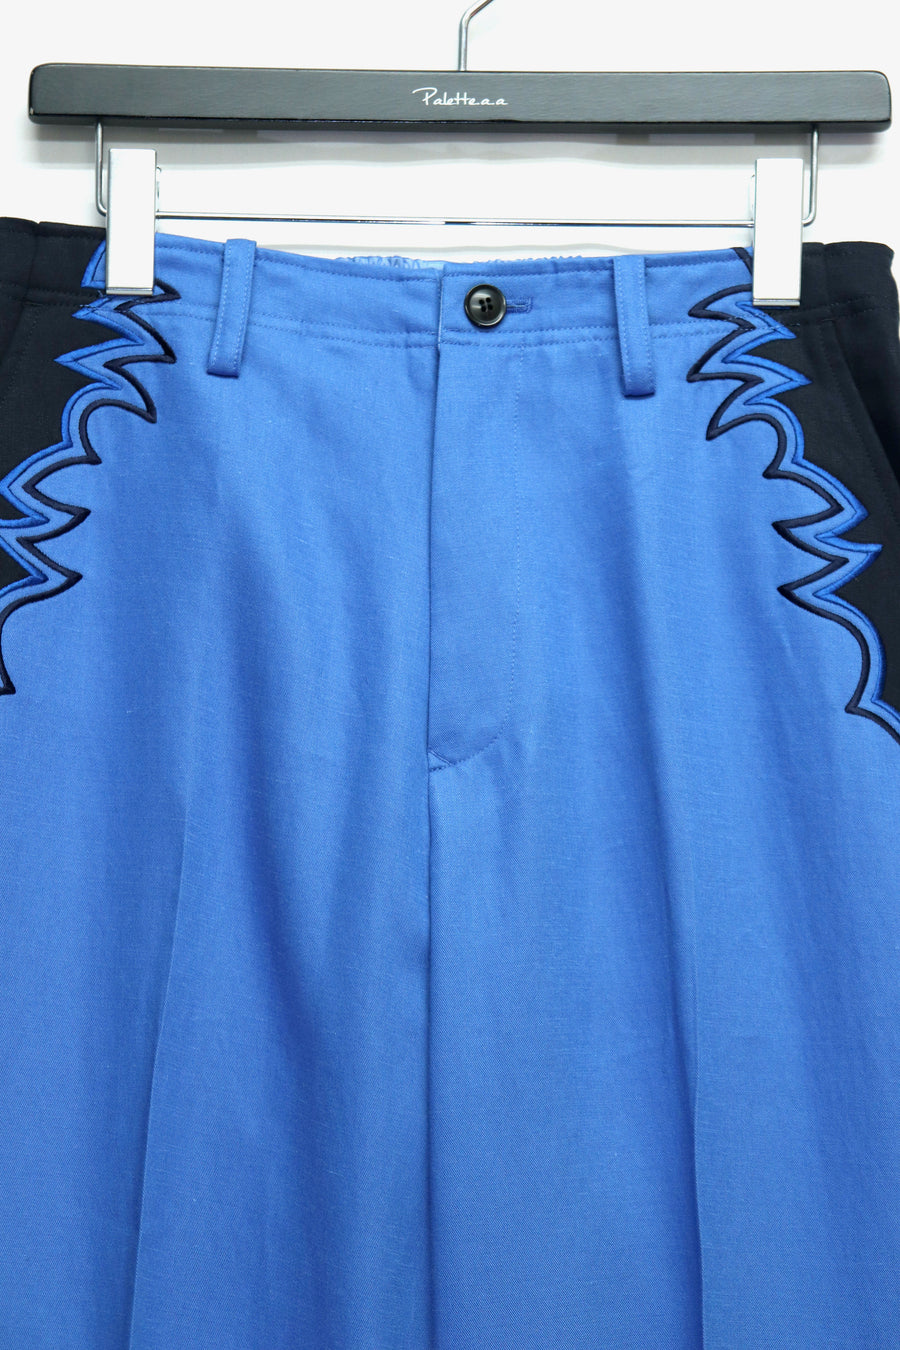 TOGA VIRILIS  Embroidery western pants(L.BLUE)